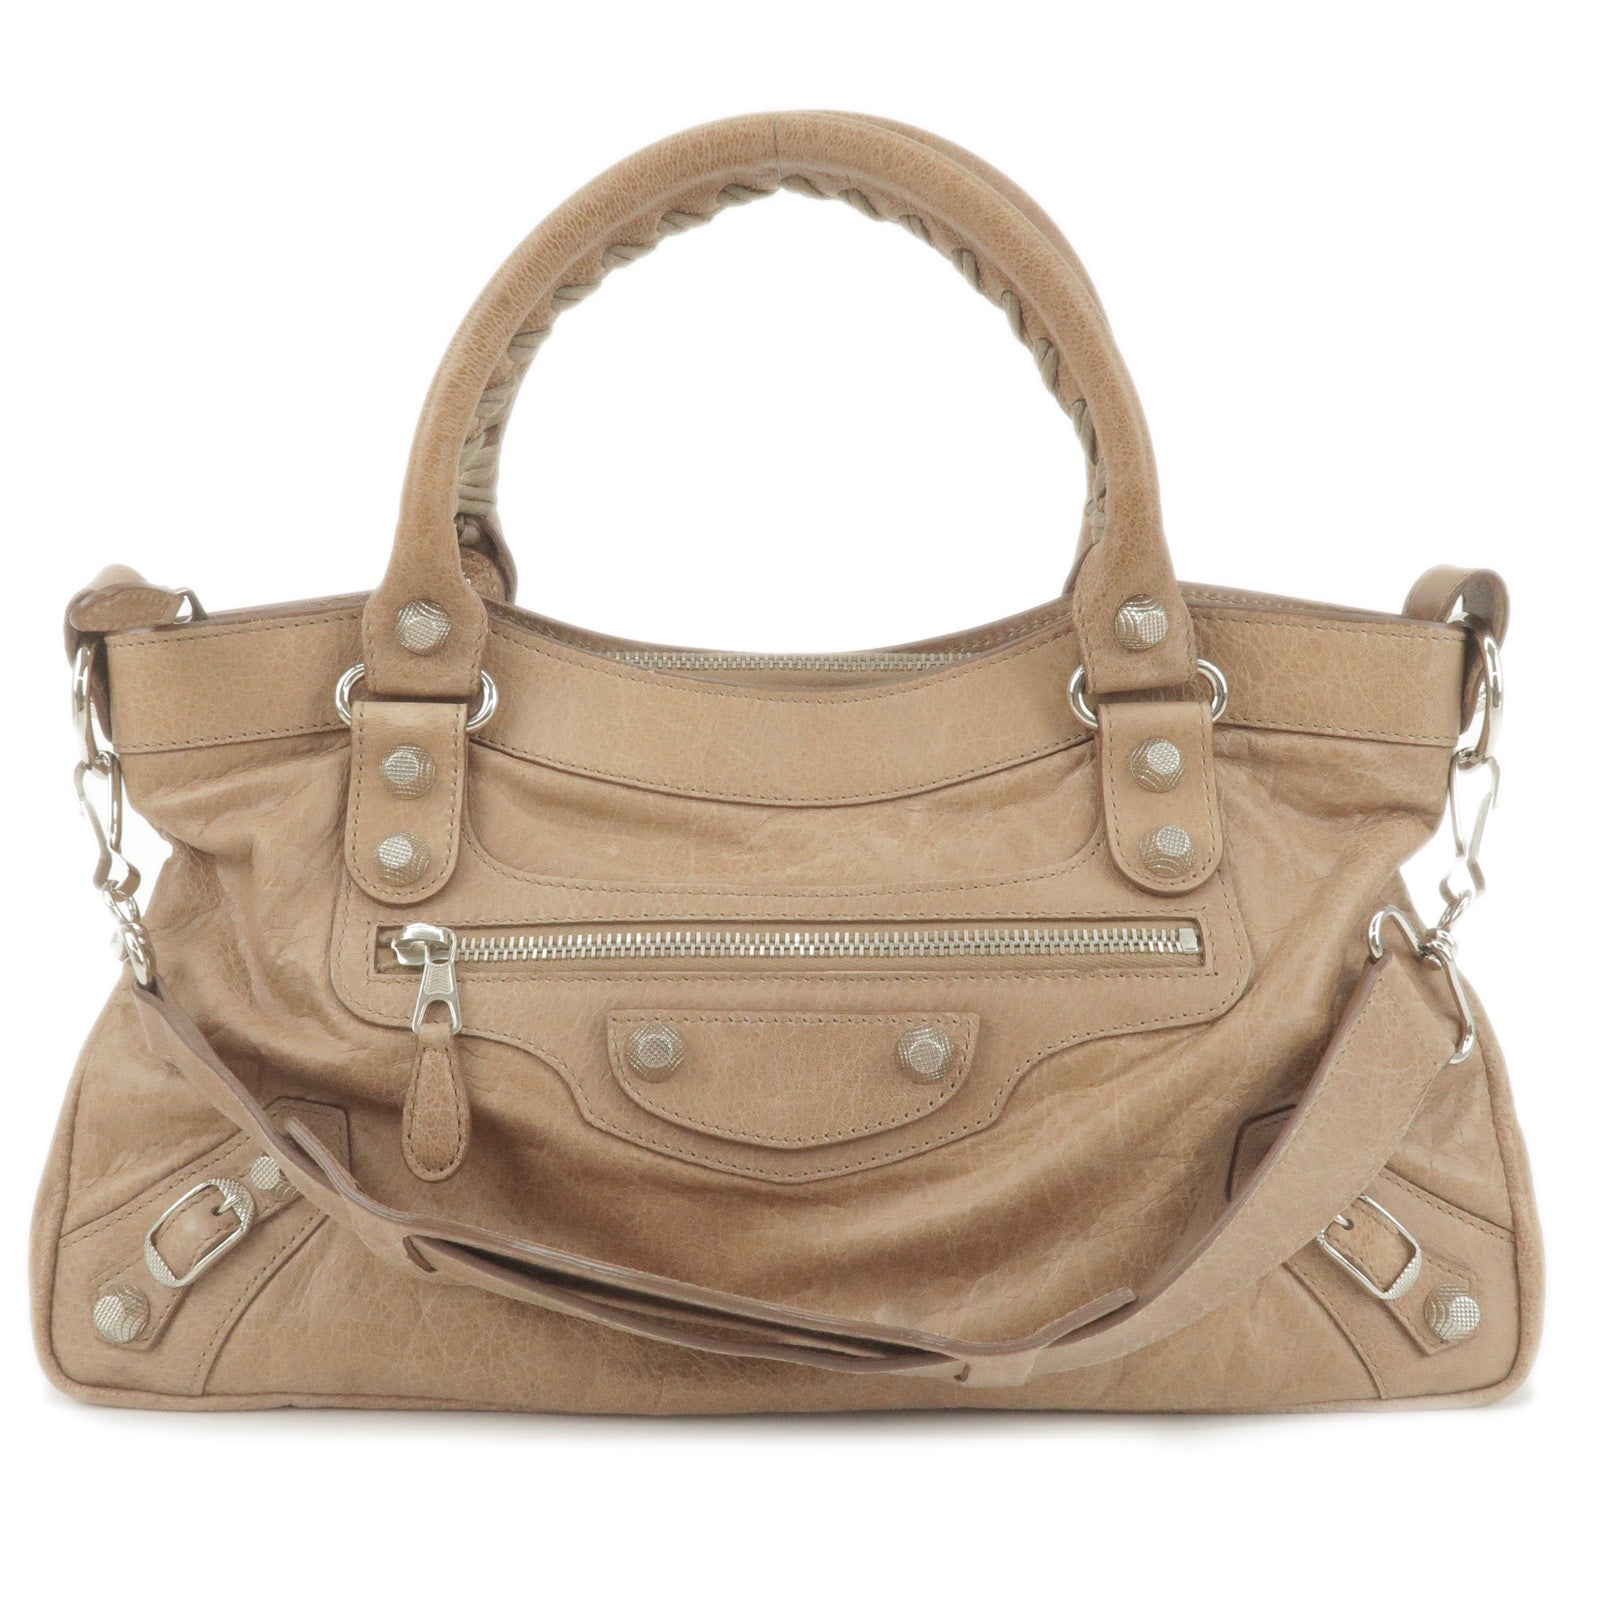 240577 – handbag lacoste shopping crossover bag nf3518cx lima black - 2Way - Leather - Bag - Light - Brown - calvin klein mercy saffiano tote - The - BALENCIAGA - First - Giant